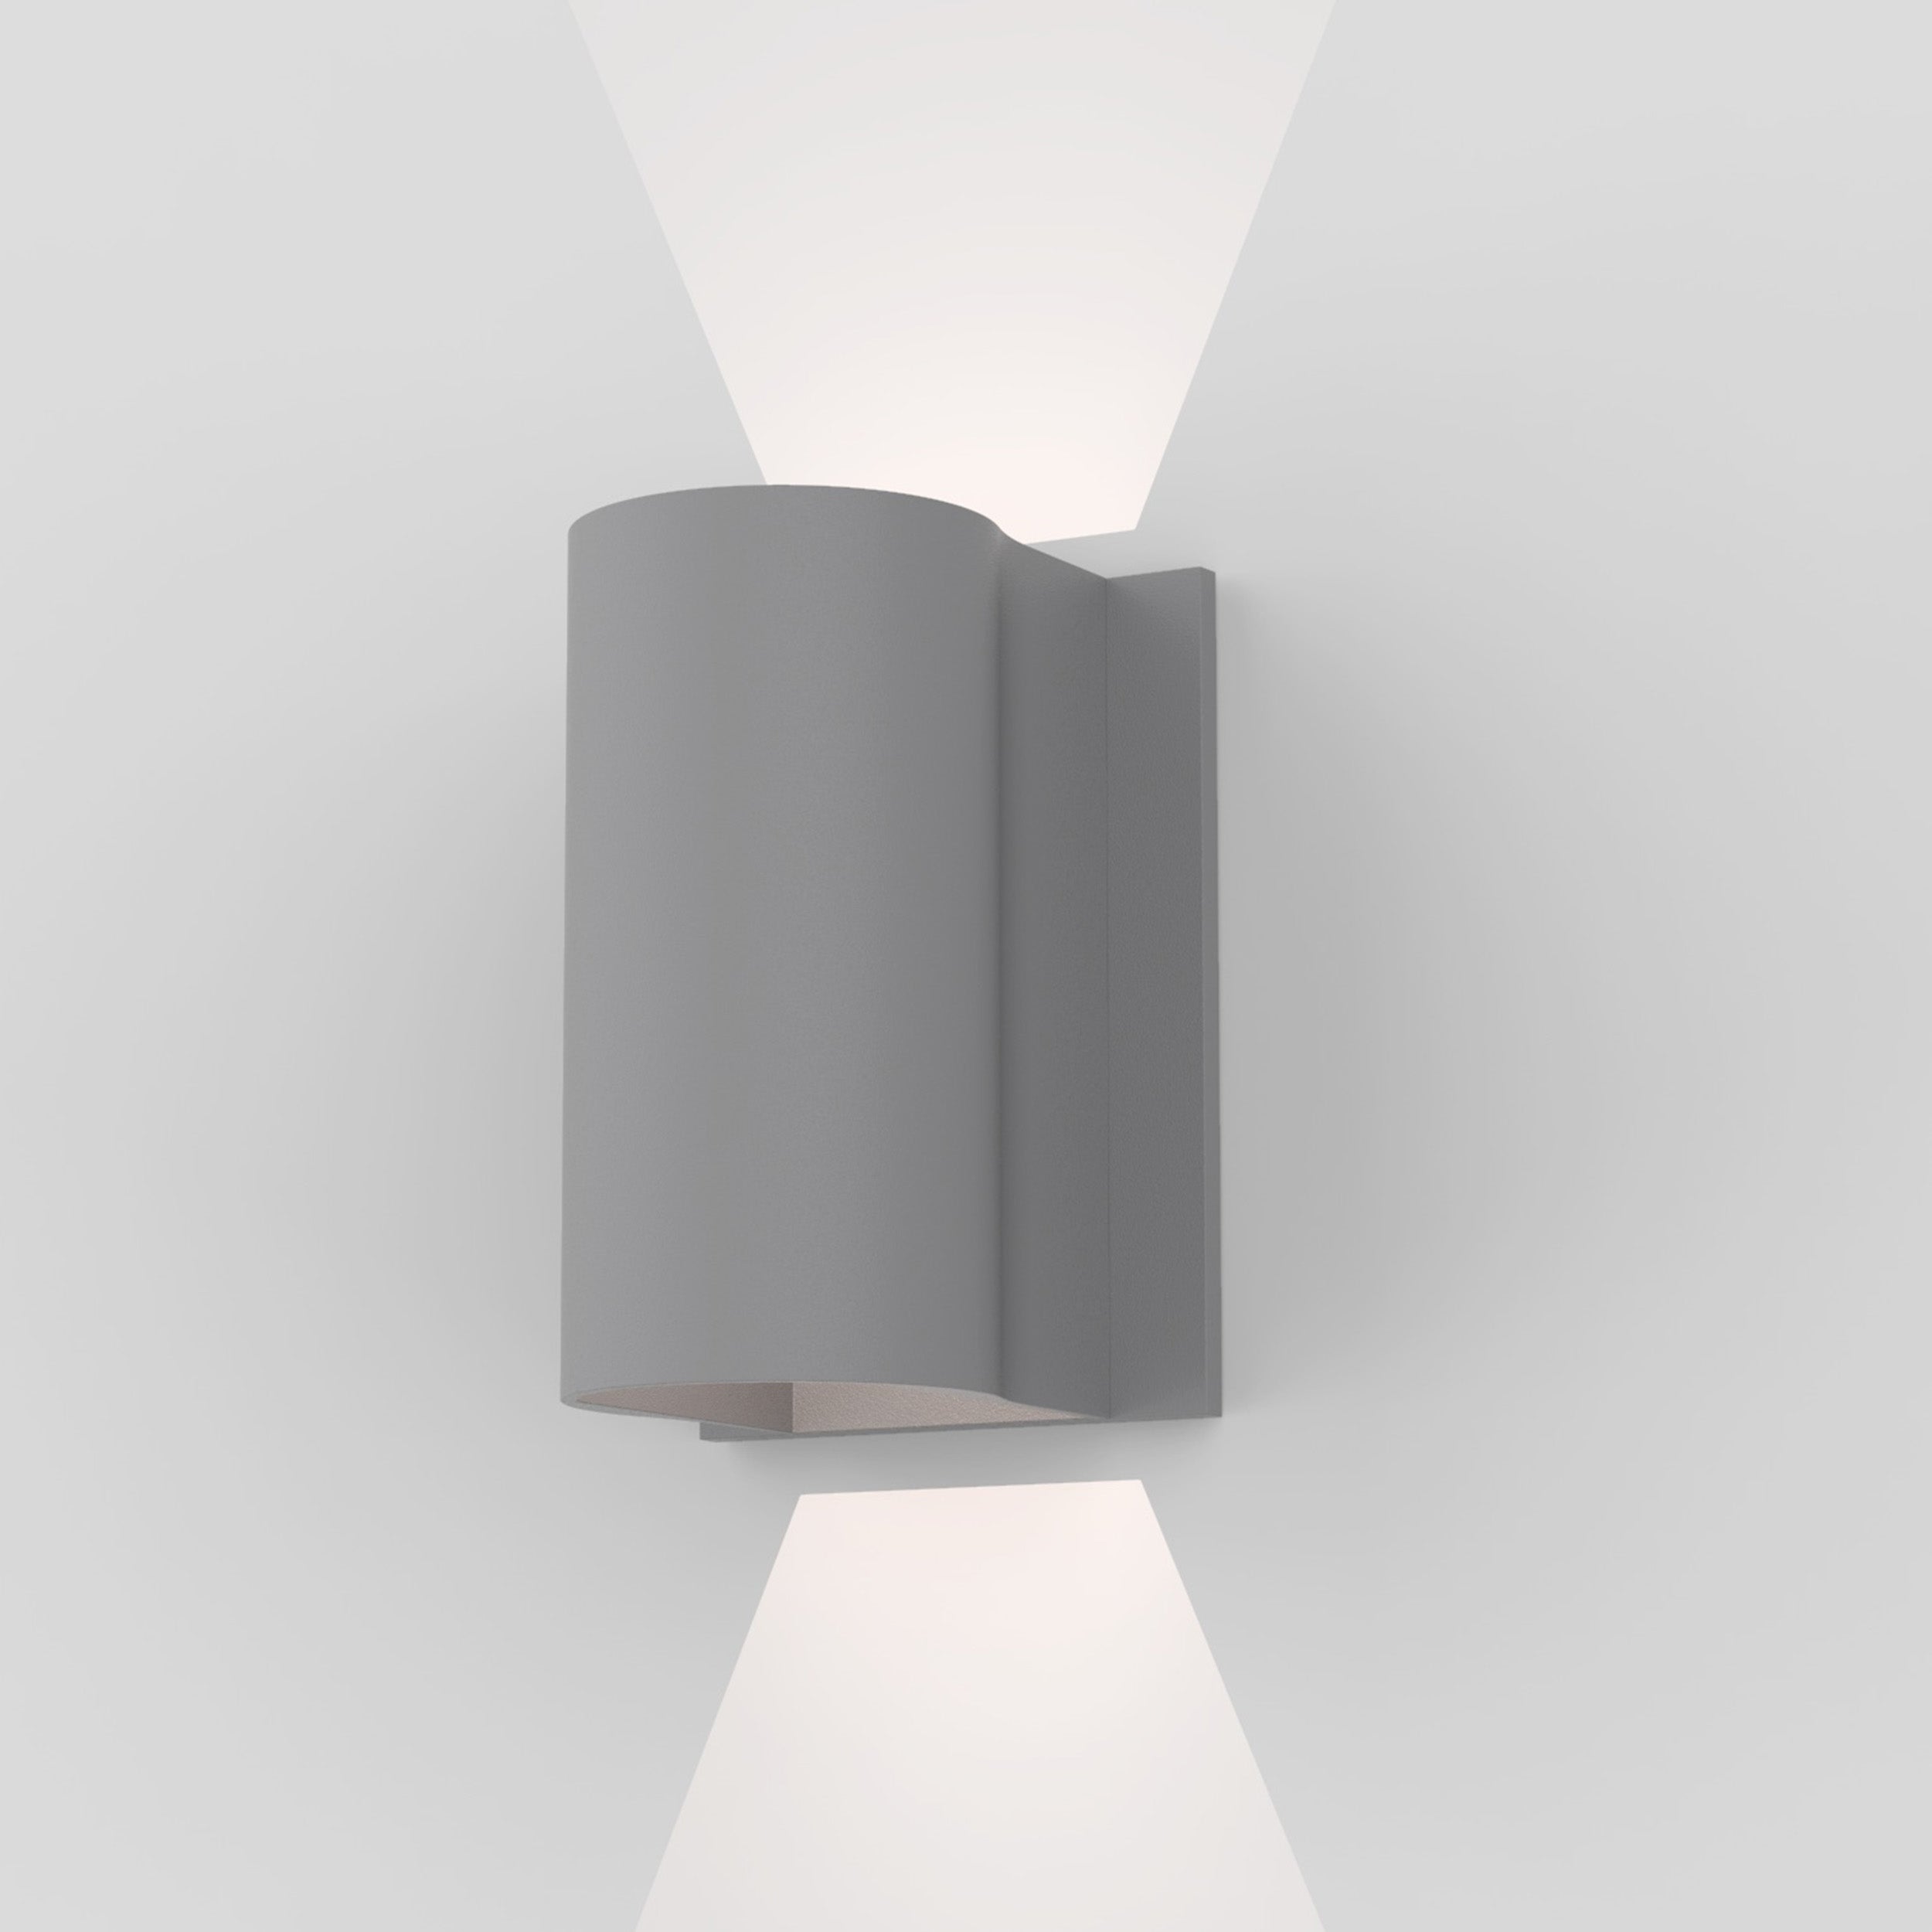 Astro Lighting Dunbar Wall Light Fixtures Astro Lighting 4.17x4.33x6.3 Textured Grey Yes (Integral), High Power LED